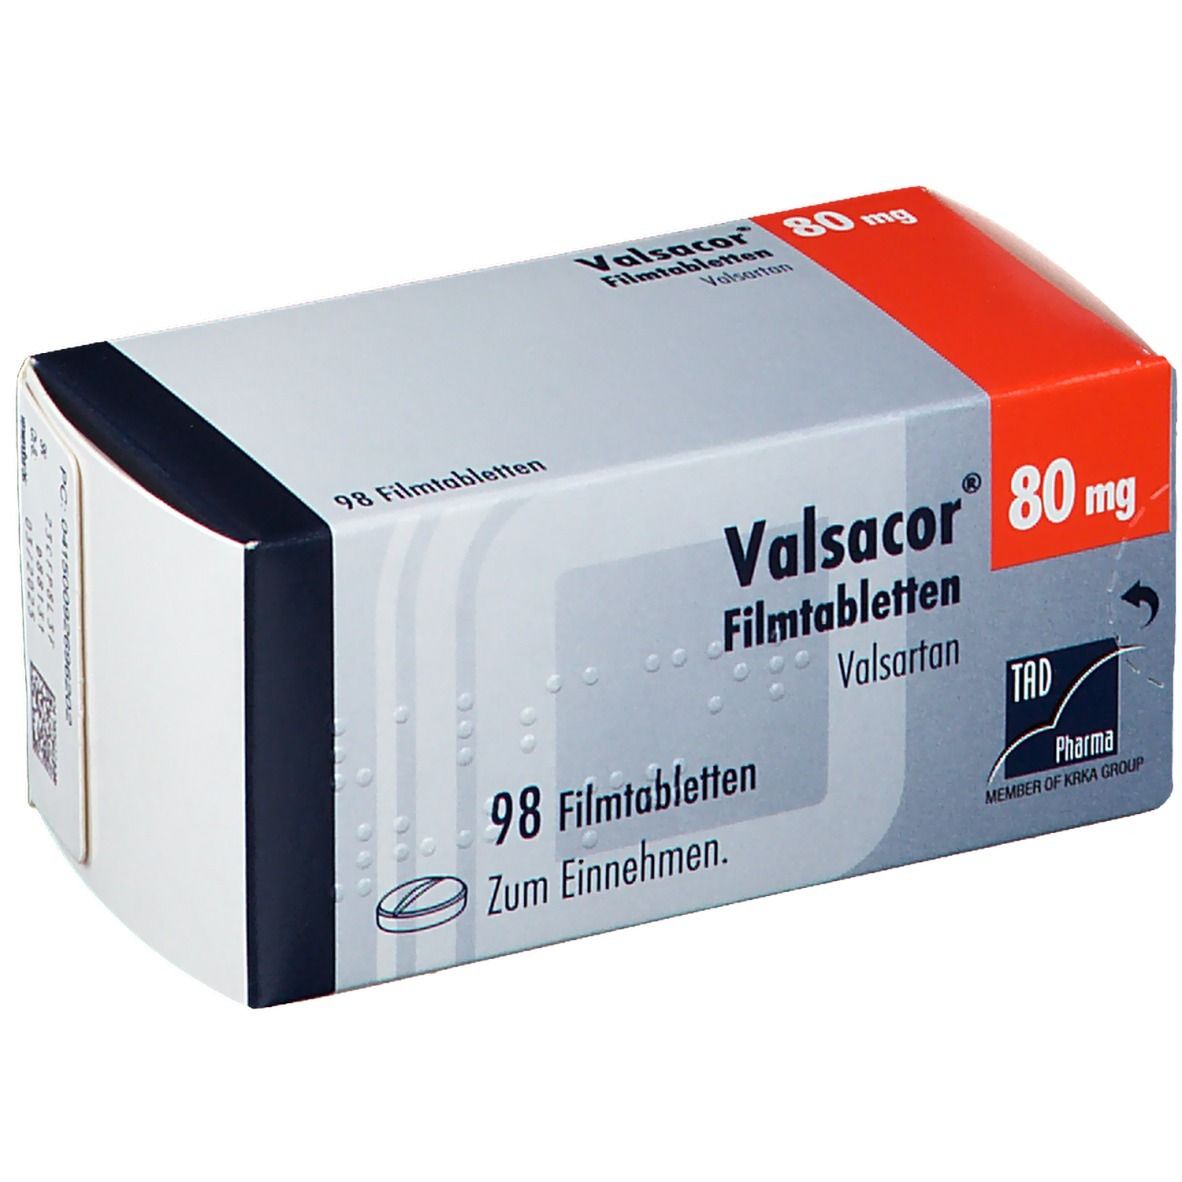 Valsacor® 80 mg